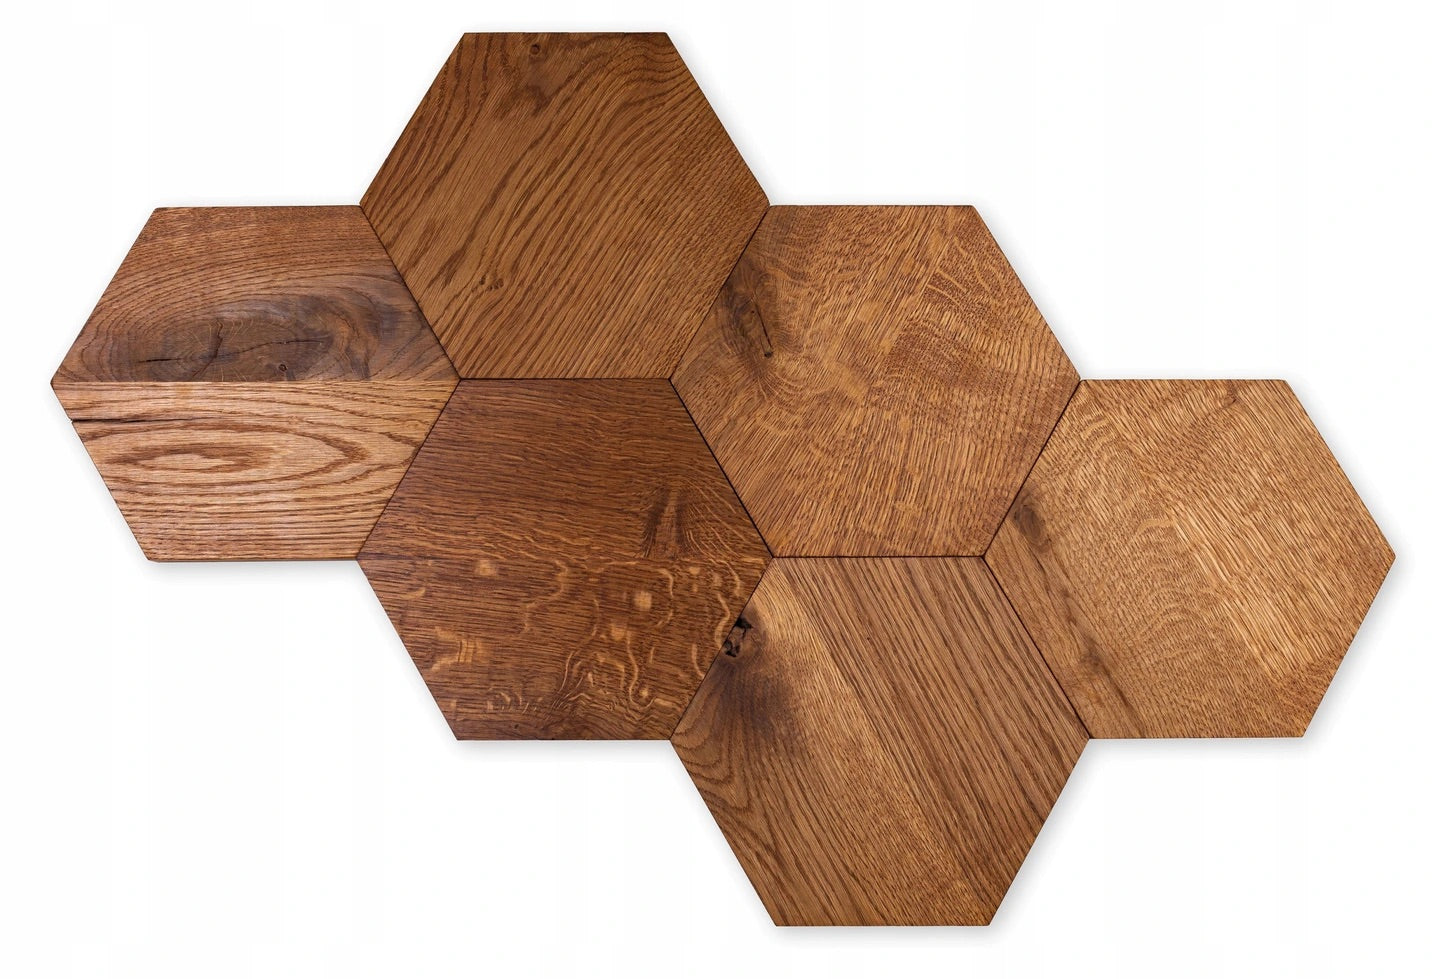 Impuro capital Selección conjunta Wooden wall panels hexagons royal oak without knots MINI - Wood Decor